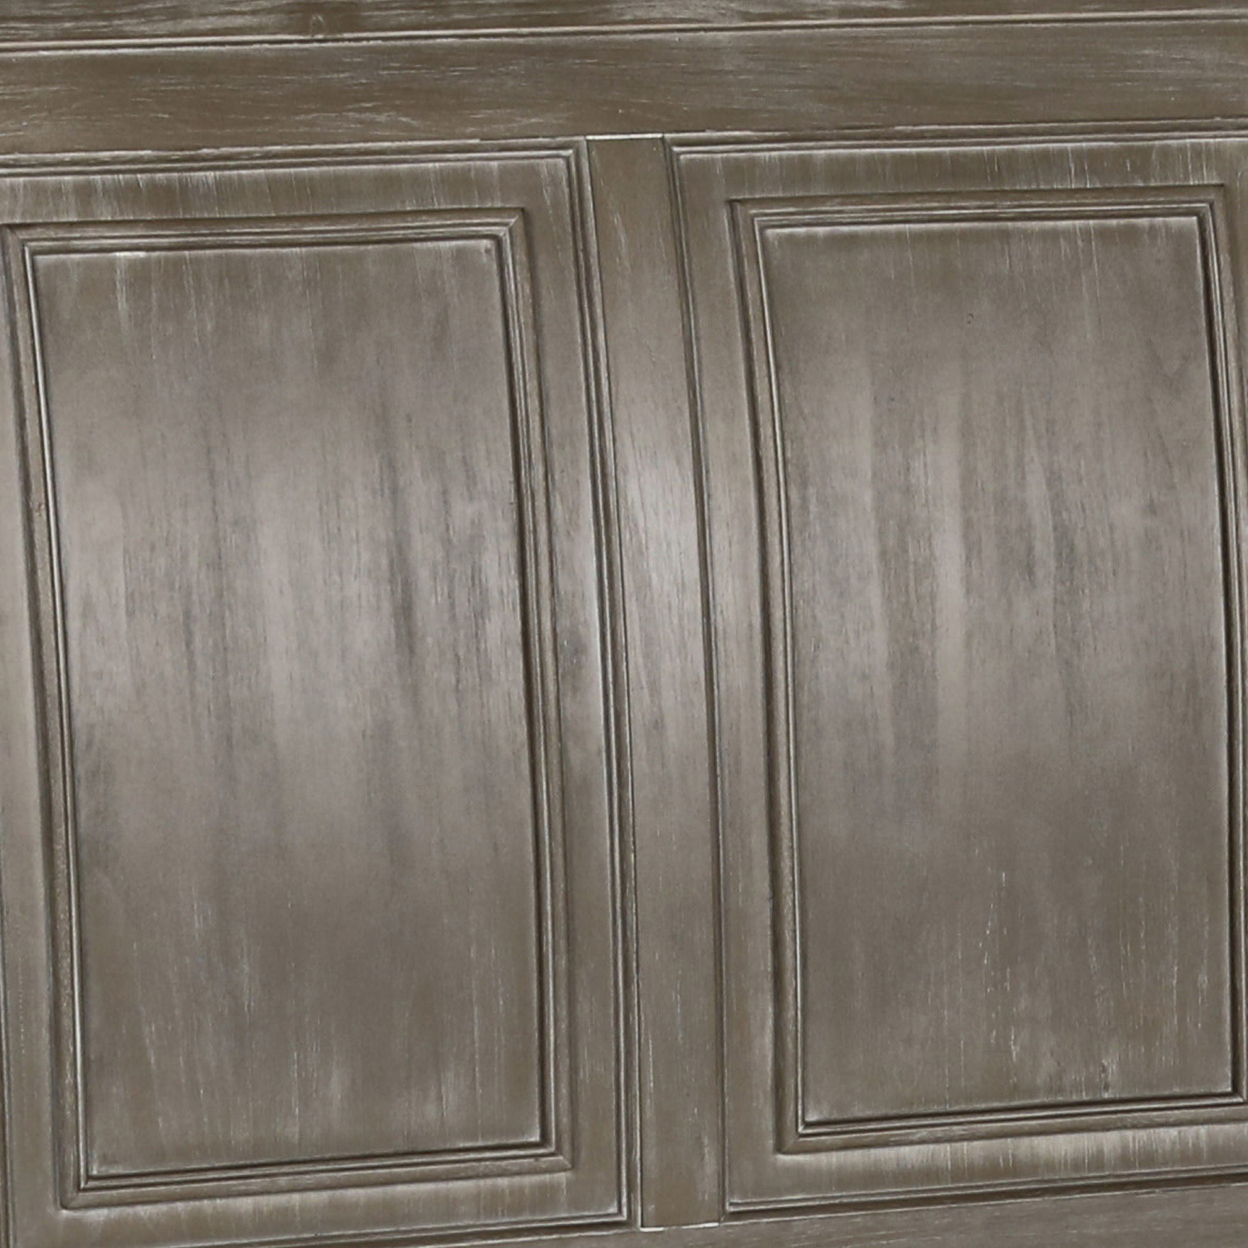 Contemporary Style Wooden Sleigh Design Panel Headboard, Gray- Saltoro Sherpi